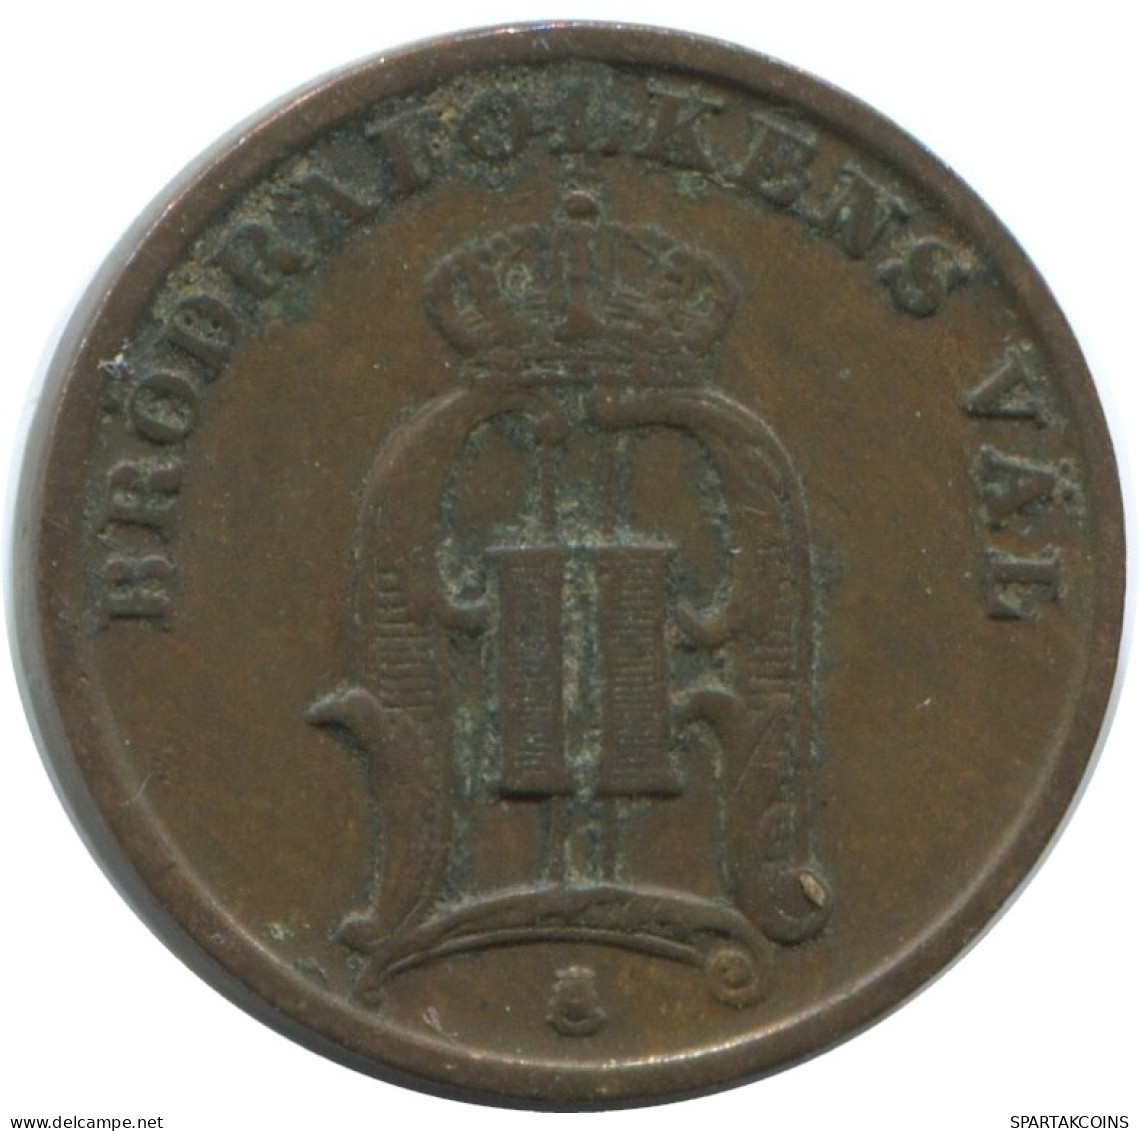 1 ORE 1899 SWEDEN Coin #AD385.2.U.A - Sweden